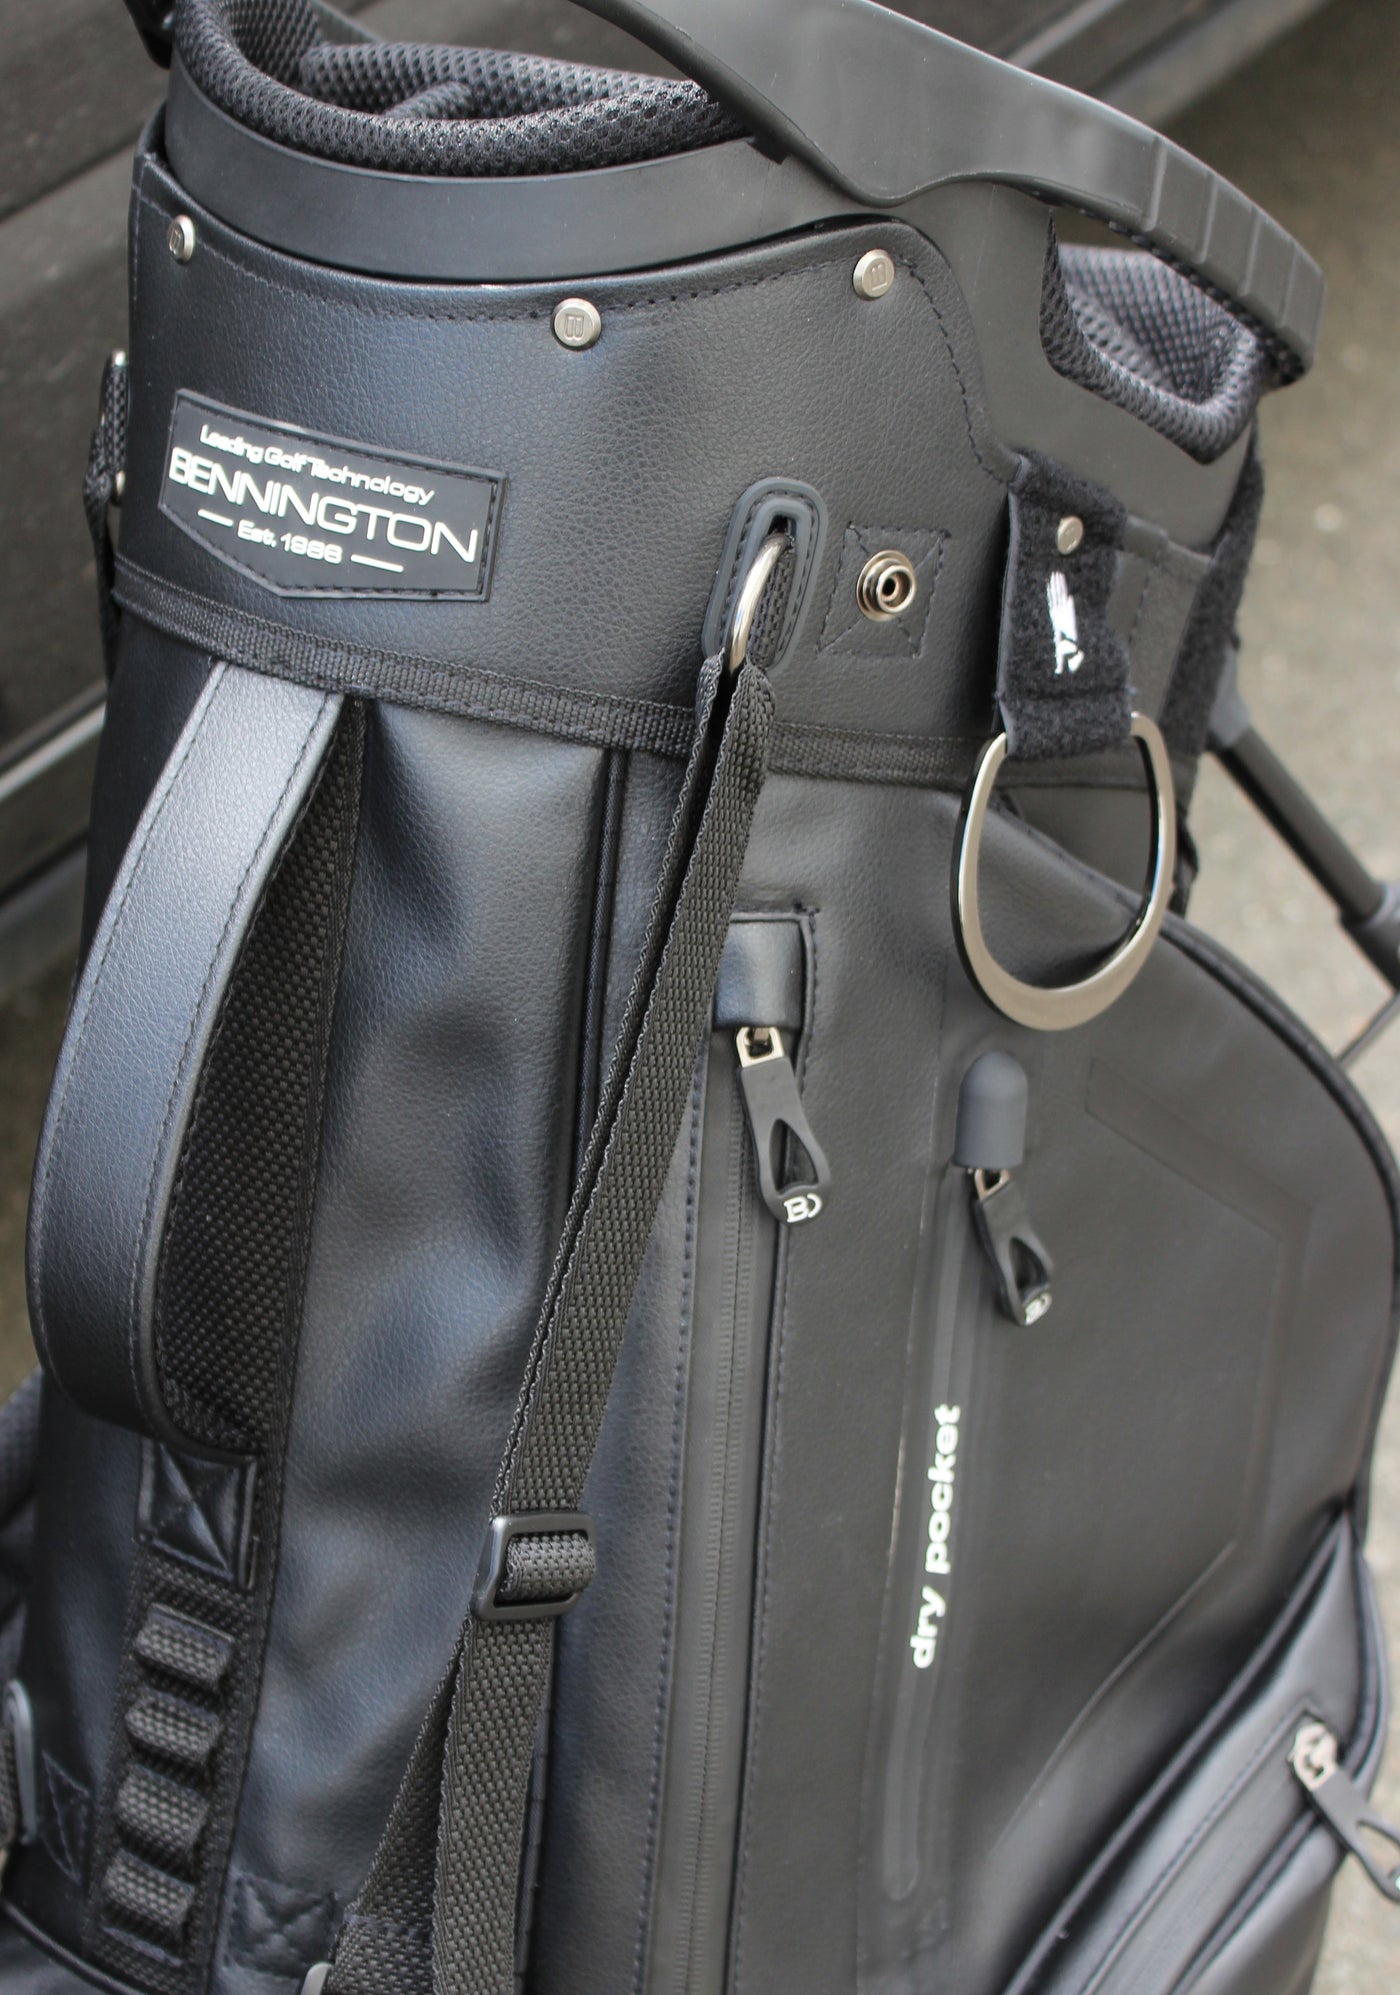 BENNINGTON Golf Bag LIMITED 2.0 14 Way Water Resistant